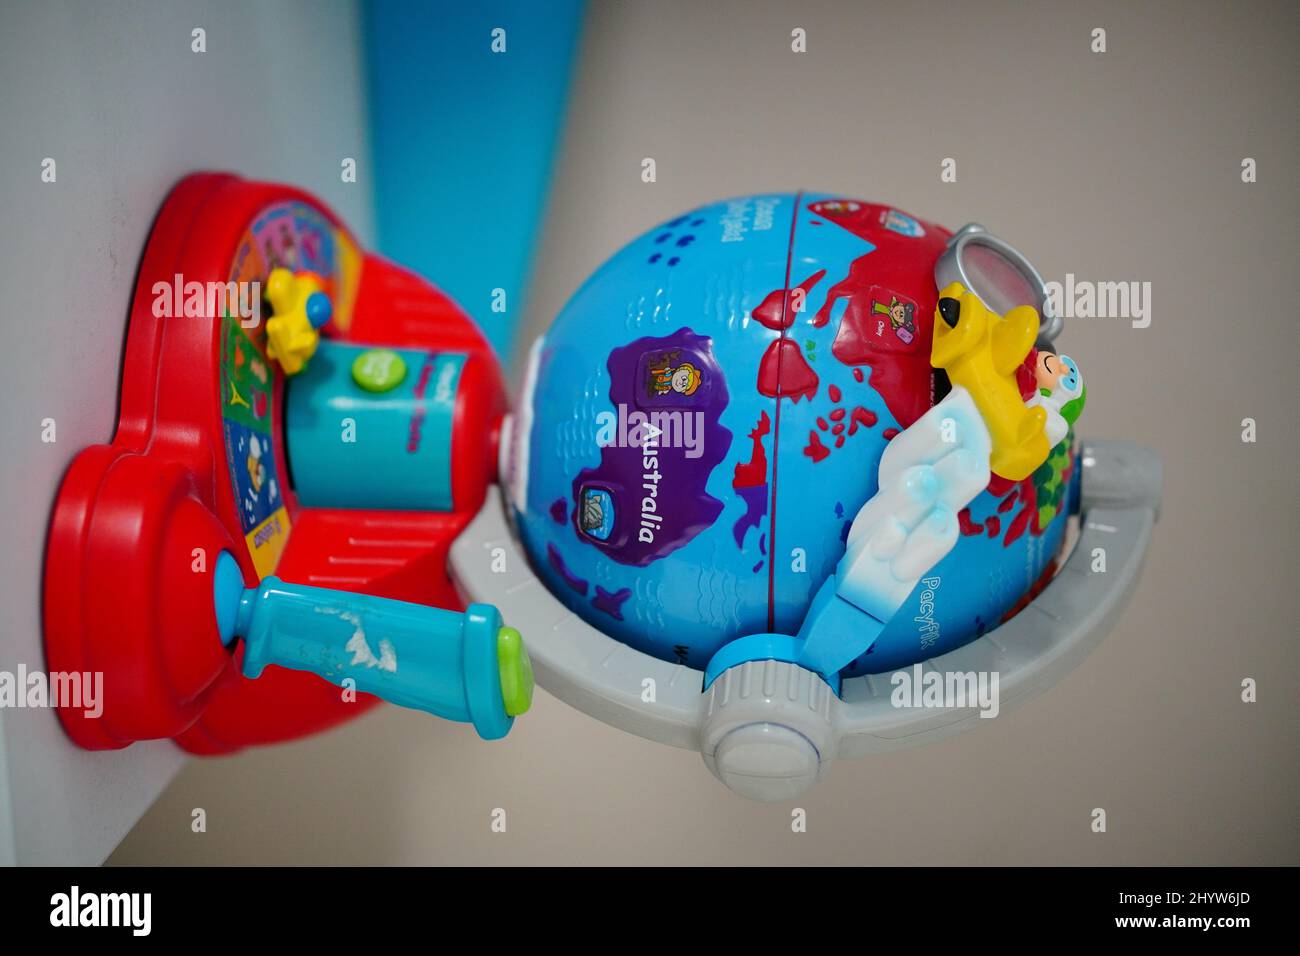 Plastic toy globus for kids Stock Photo - Alamy